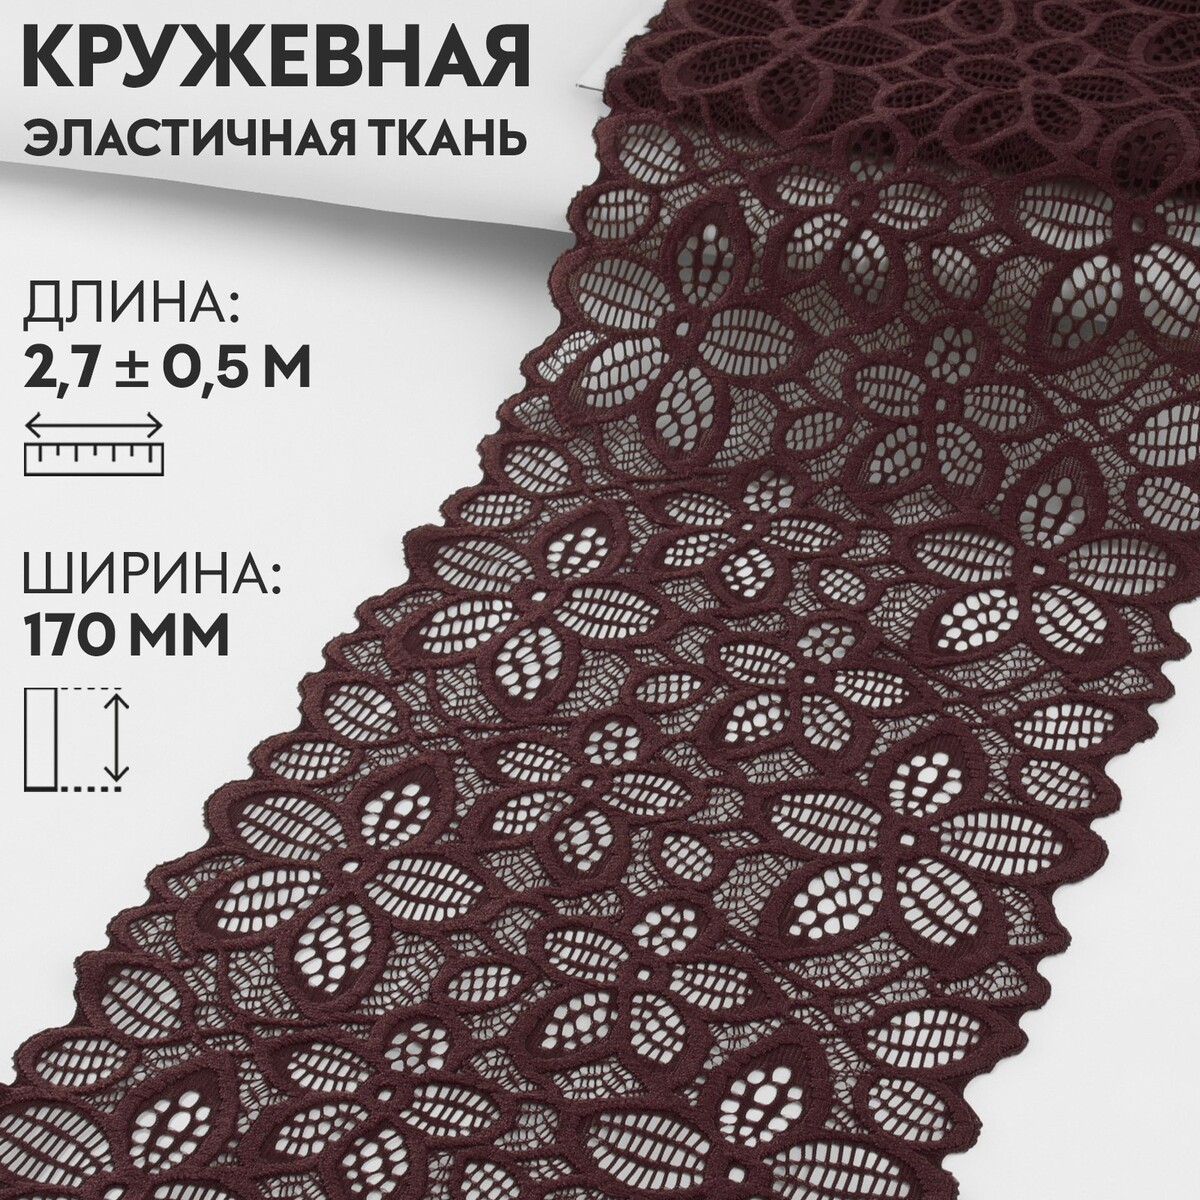 Кружевная эластичная ткань, 170 мм × 2,7 ± 0,5 м, цвет шоколадный шоколадный дедушка